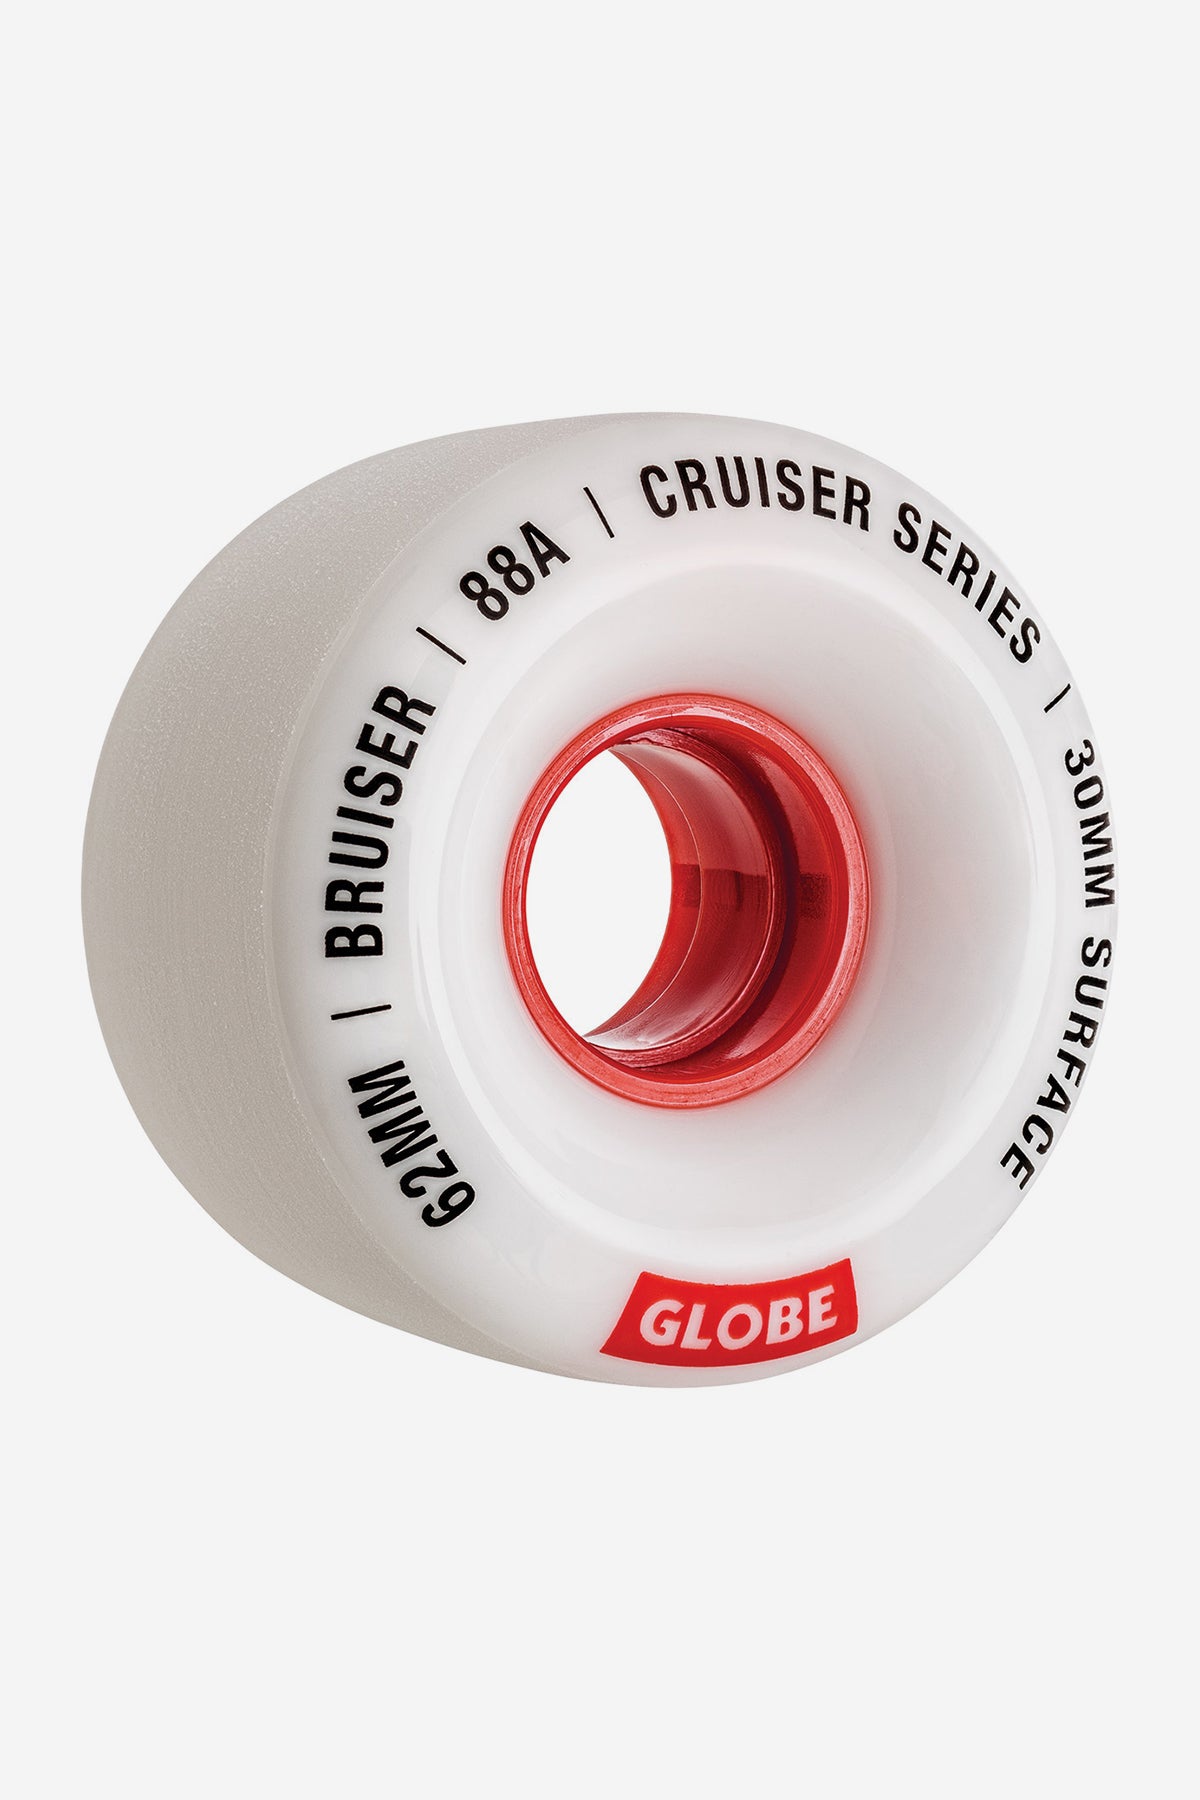 Bruiser Cruiser Wheel 62mm 4 Pack - Globe Brand AU